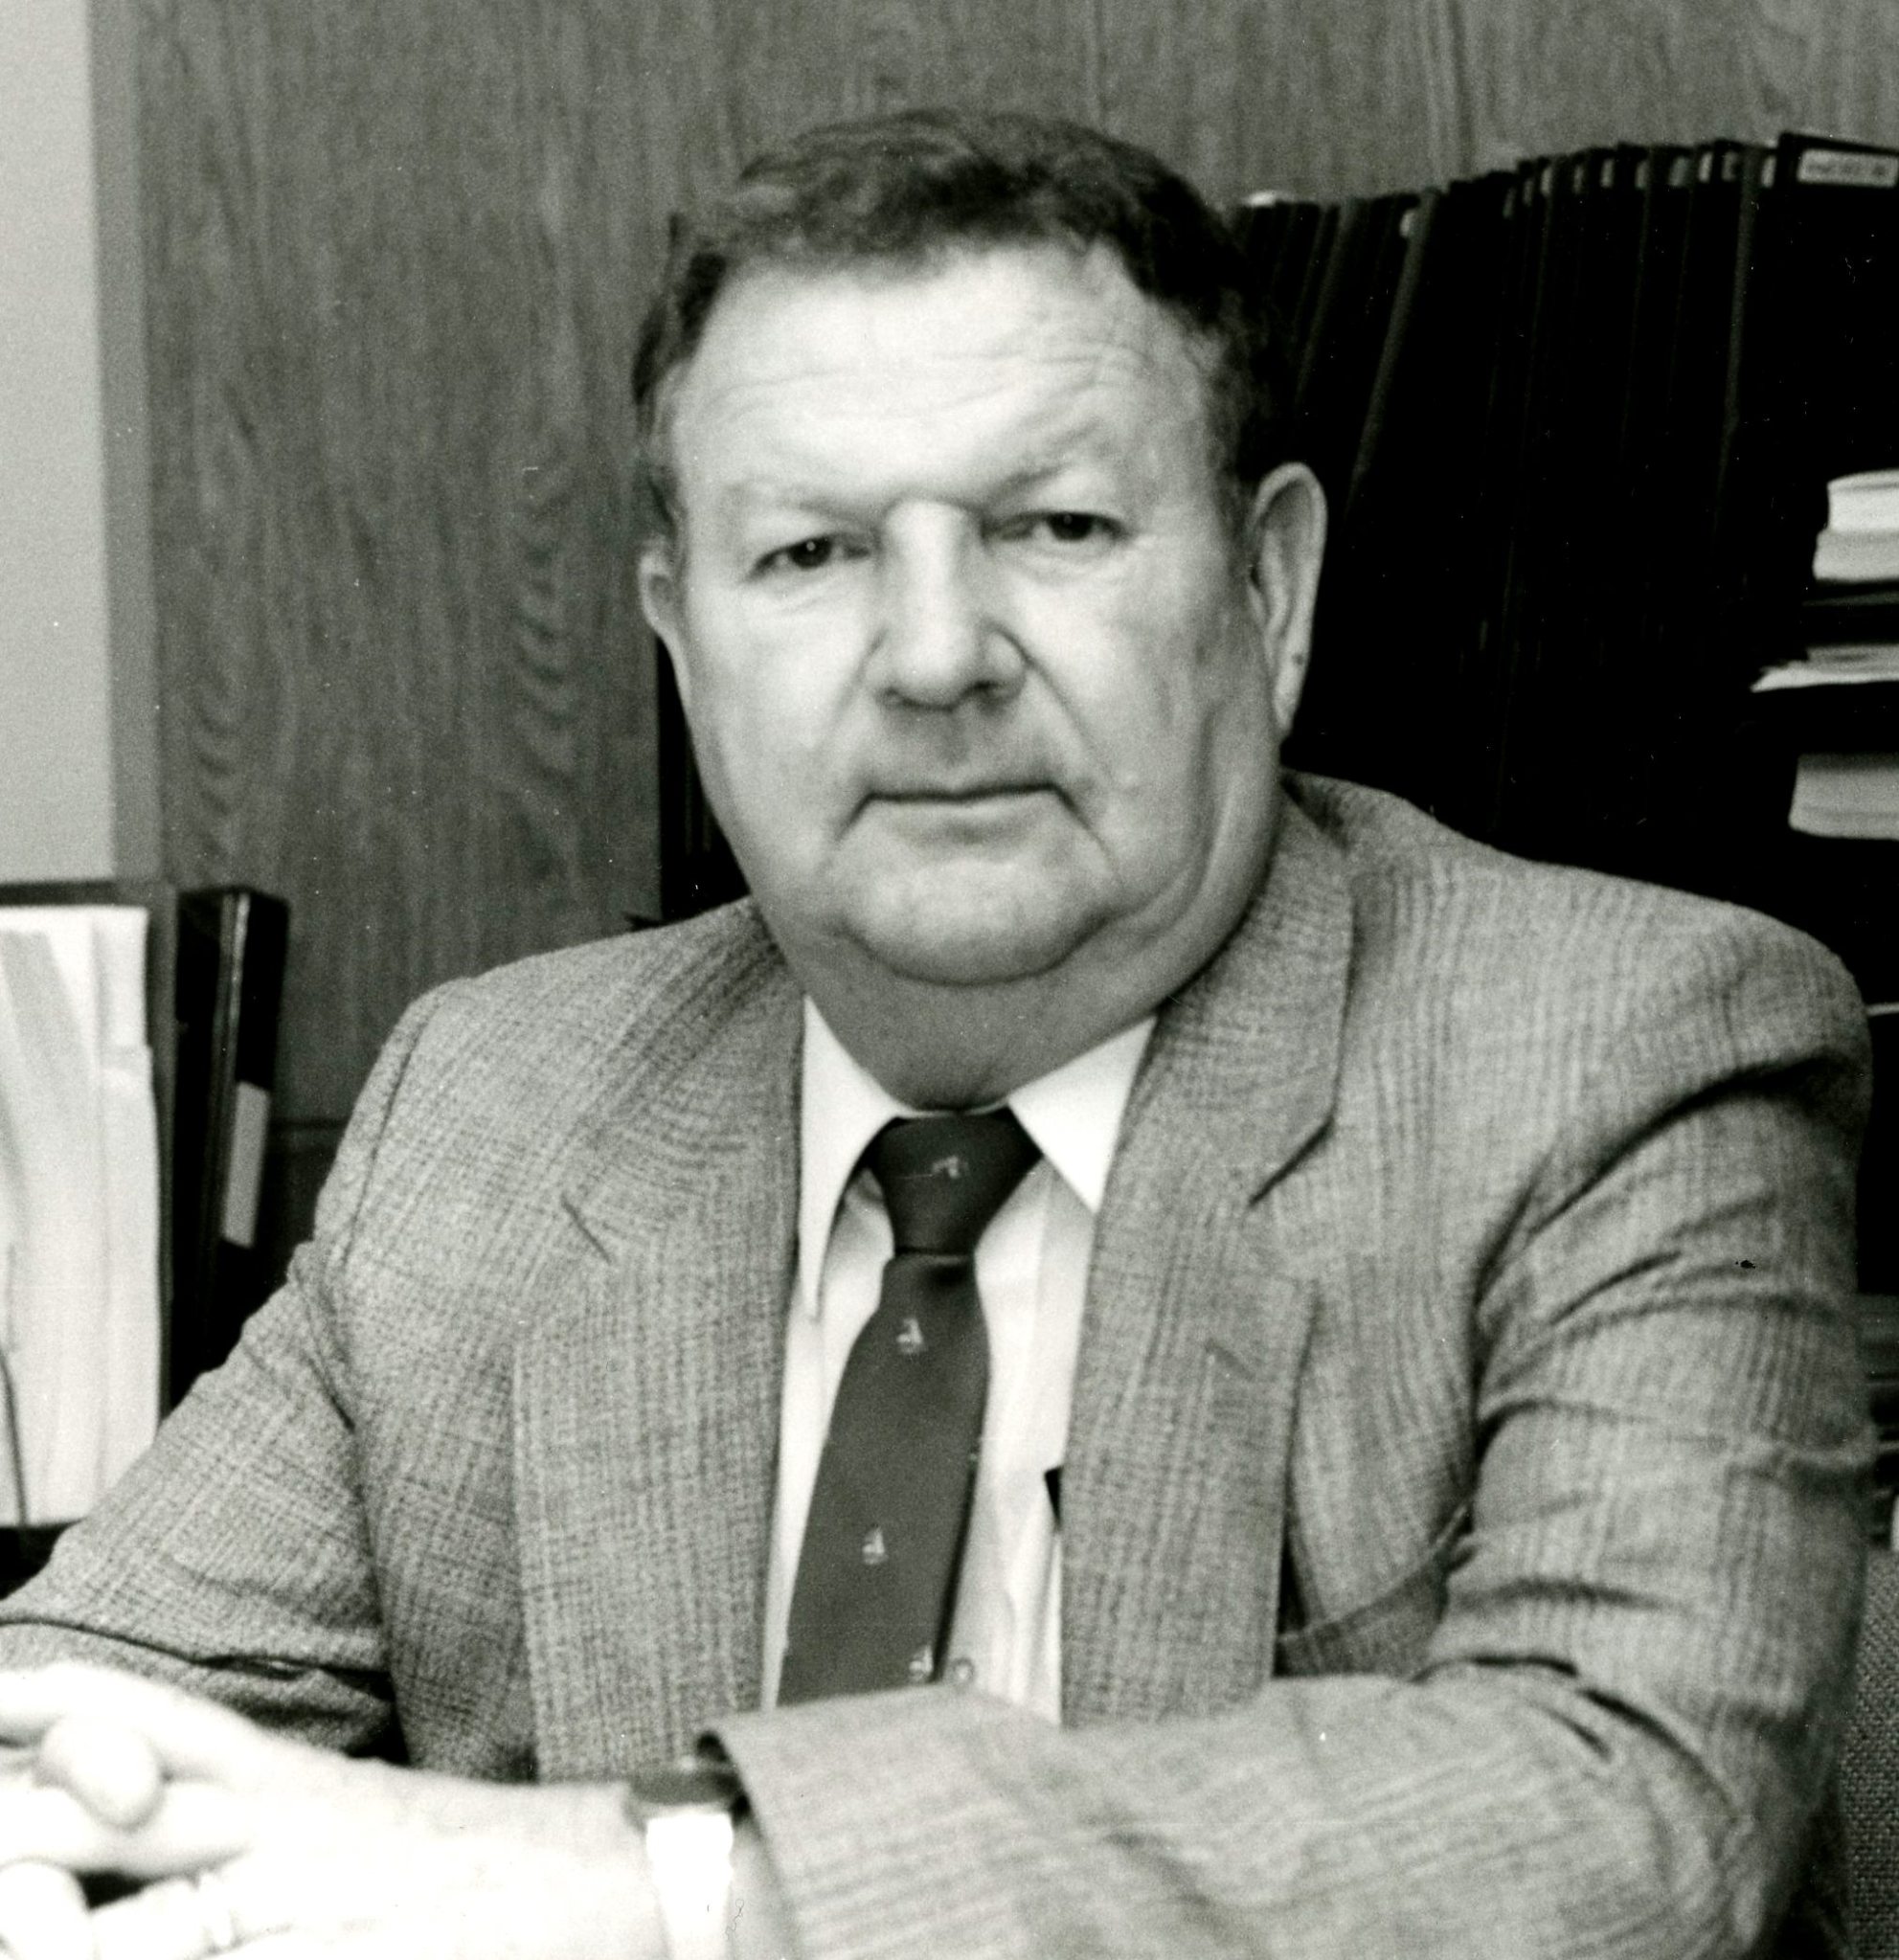 Former NASA Chief Test Director Norm Carlson